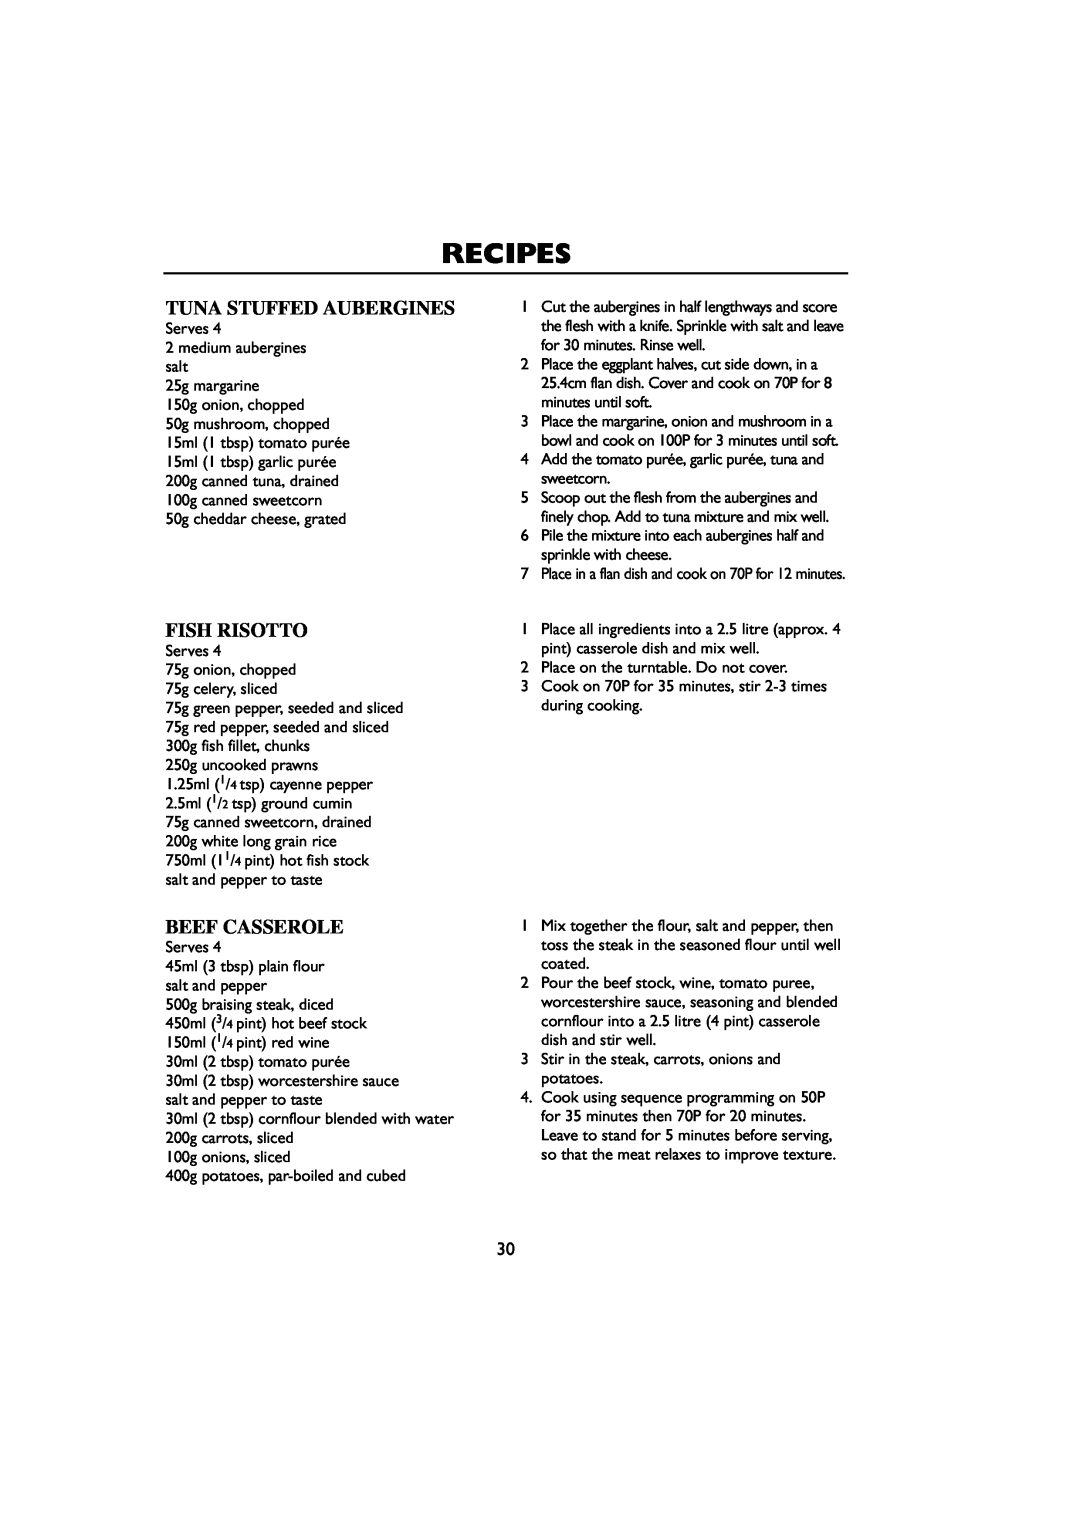 Sharp R-259 operation manual Tuna Stuffed Aubergines, Fish Risotto, Beef Casserole, Recipes 